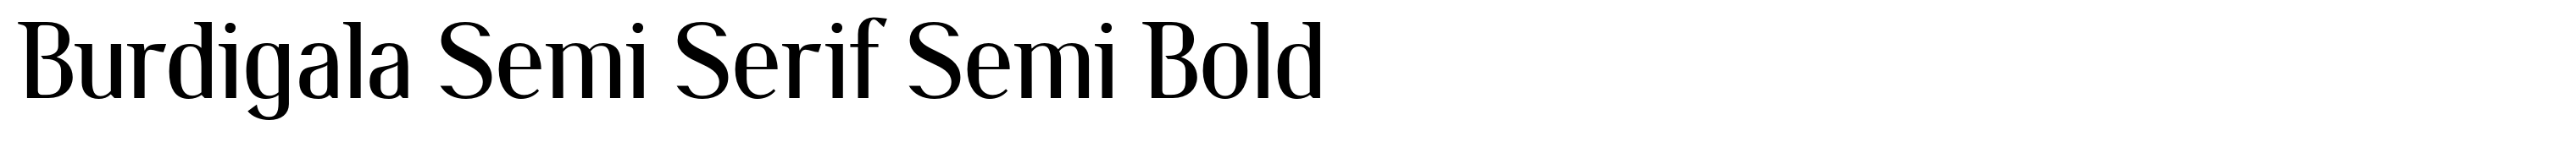 Burdigala Semi Serif Semi Bold